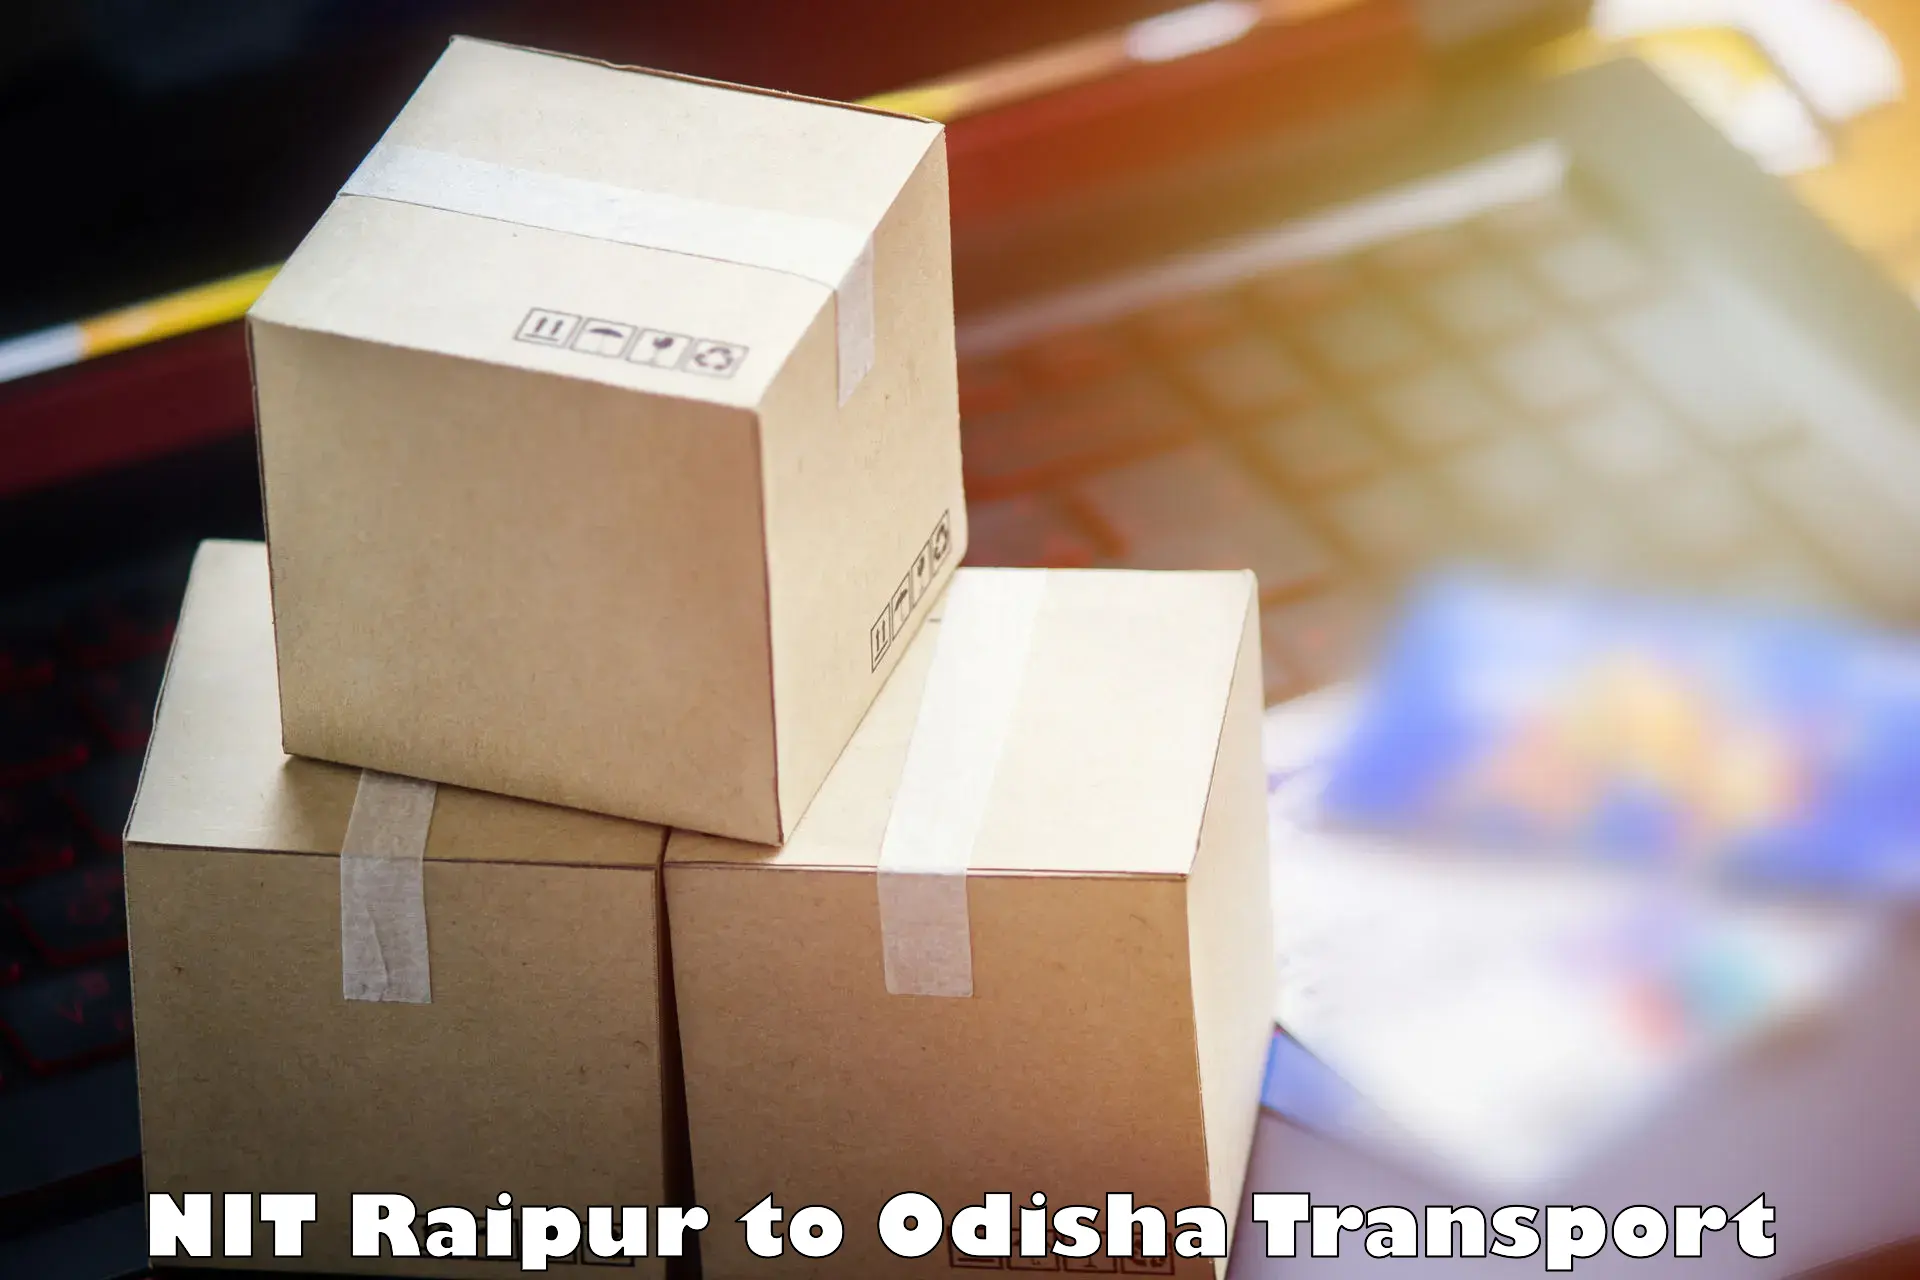 Delivery service NIT Raipur to Berhampur Ganjam